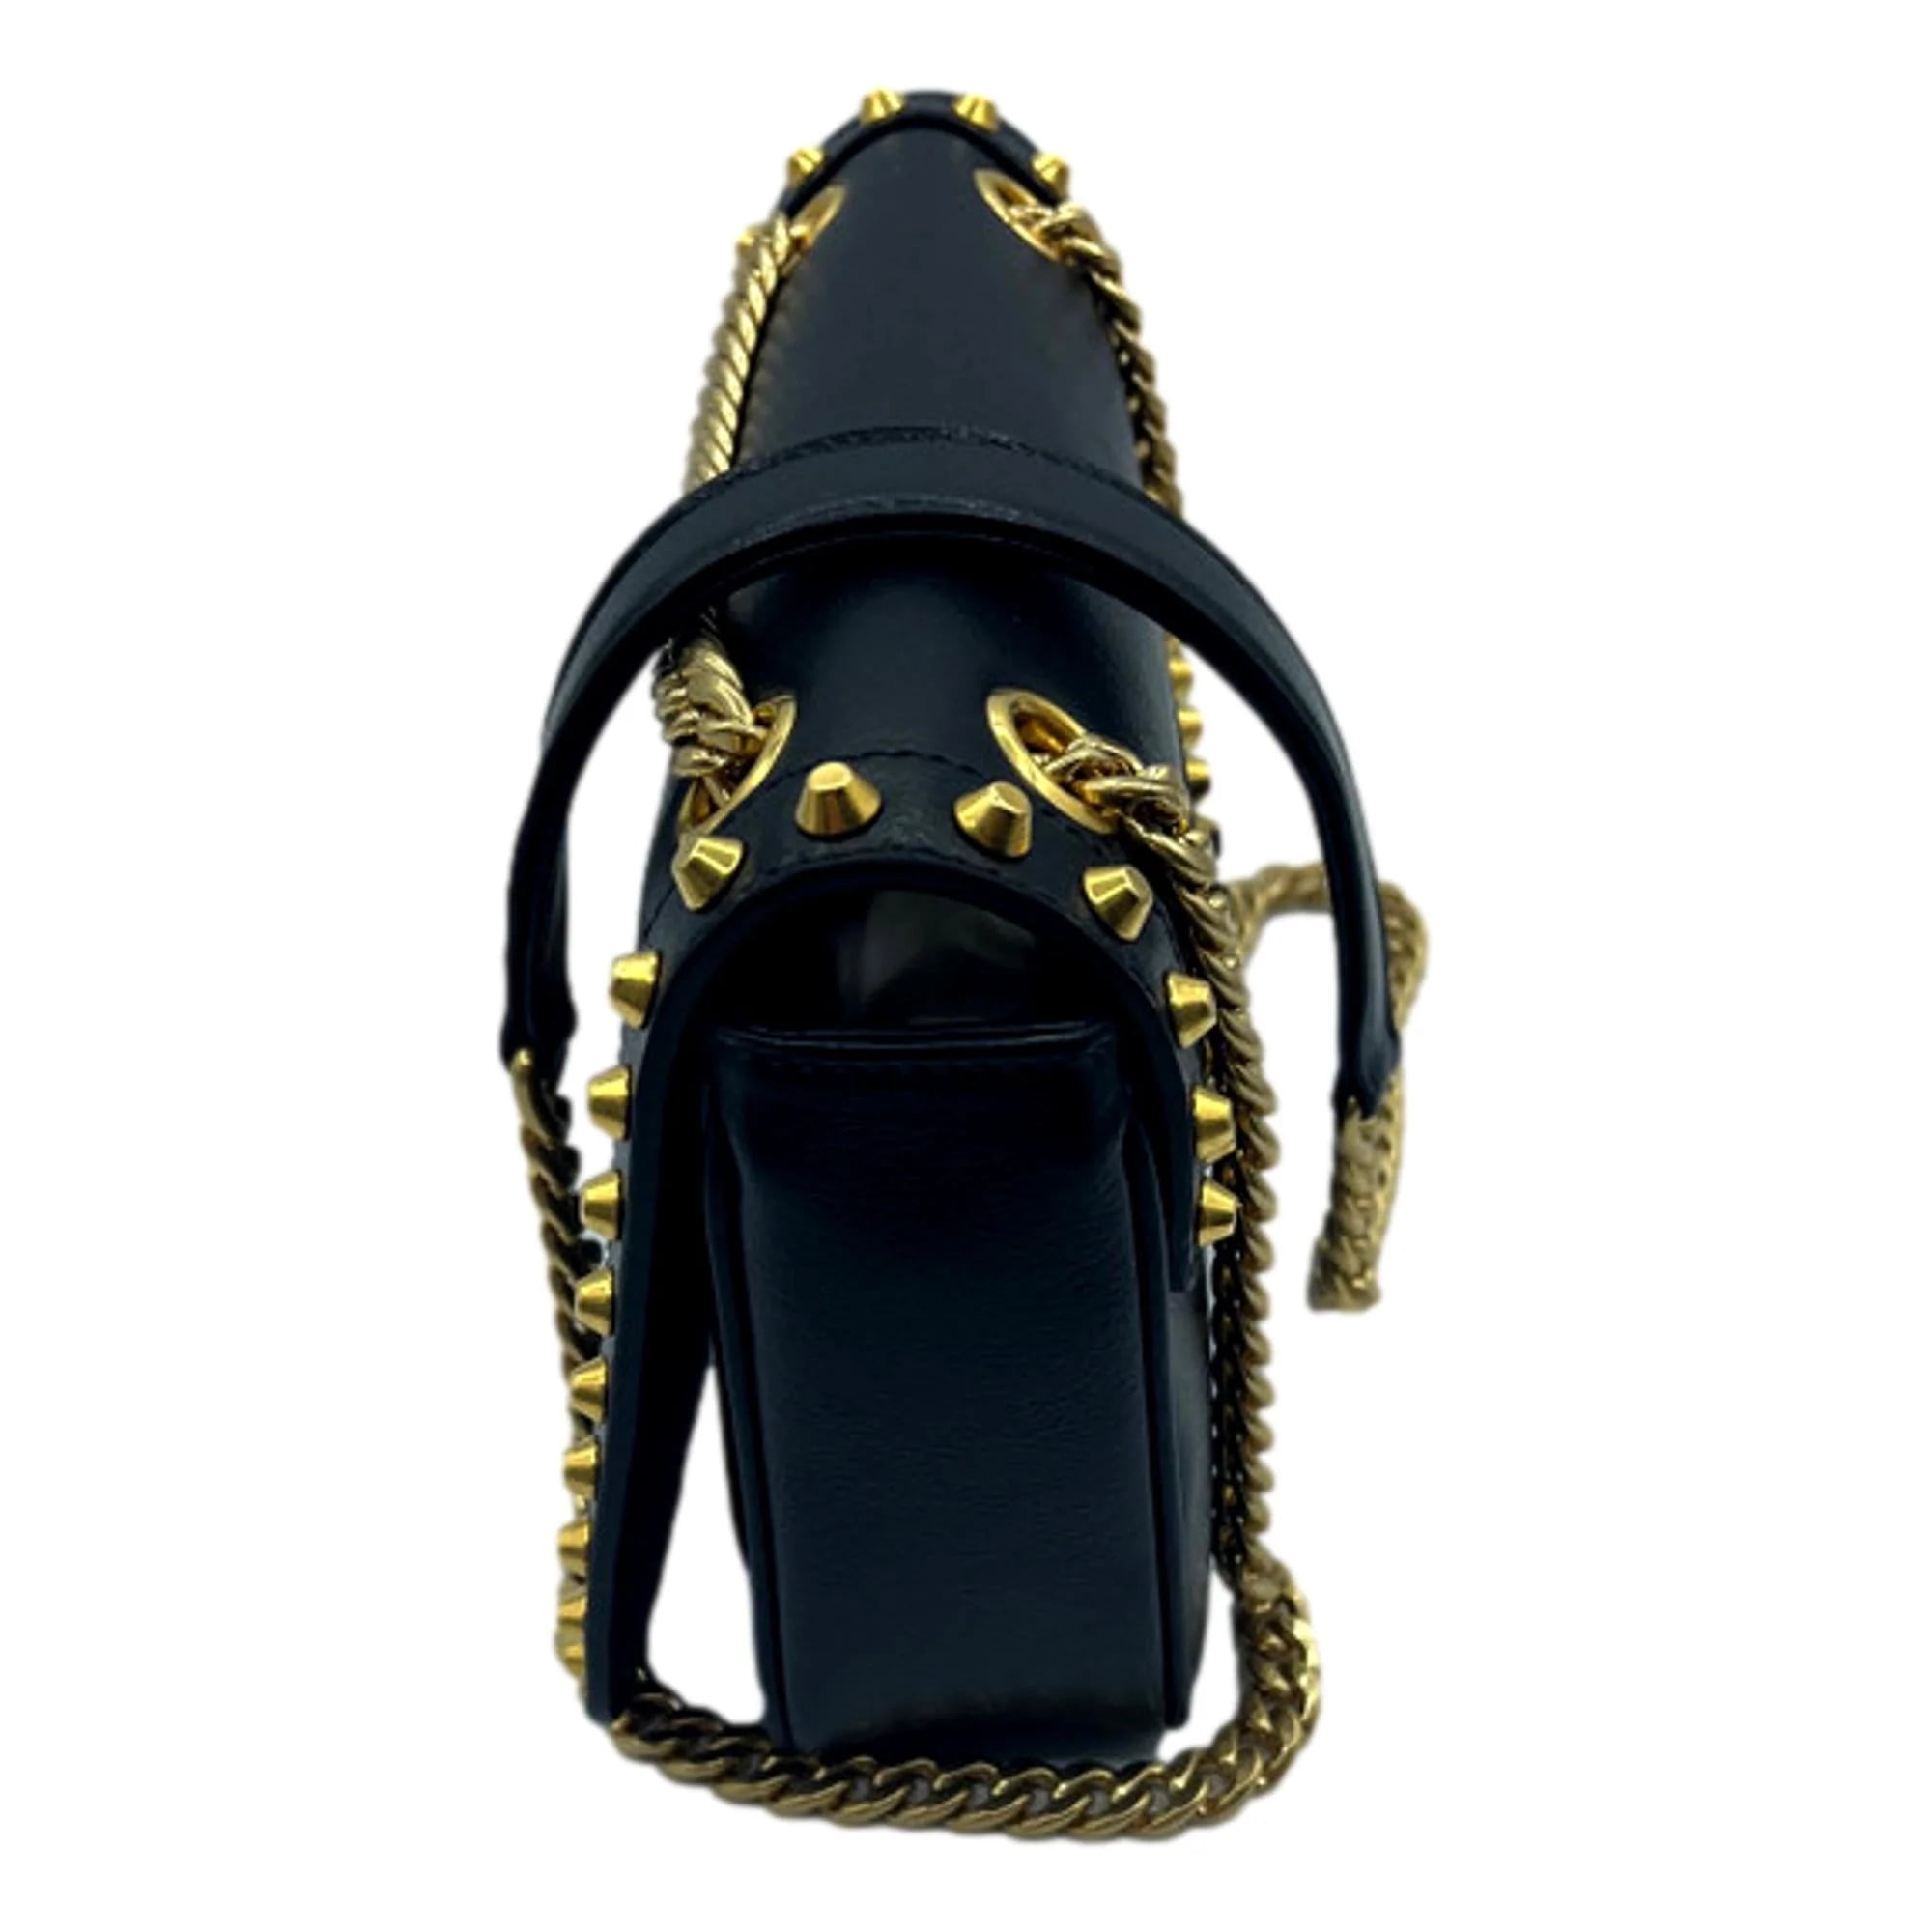 Prada Pattina Glace Calf Leather Cammeo Beige Gold Studded Bag 1BD147